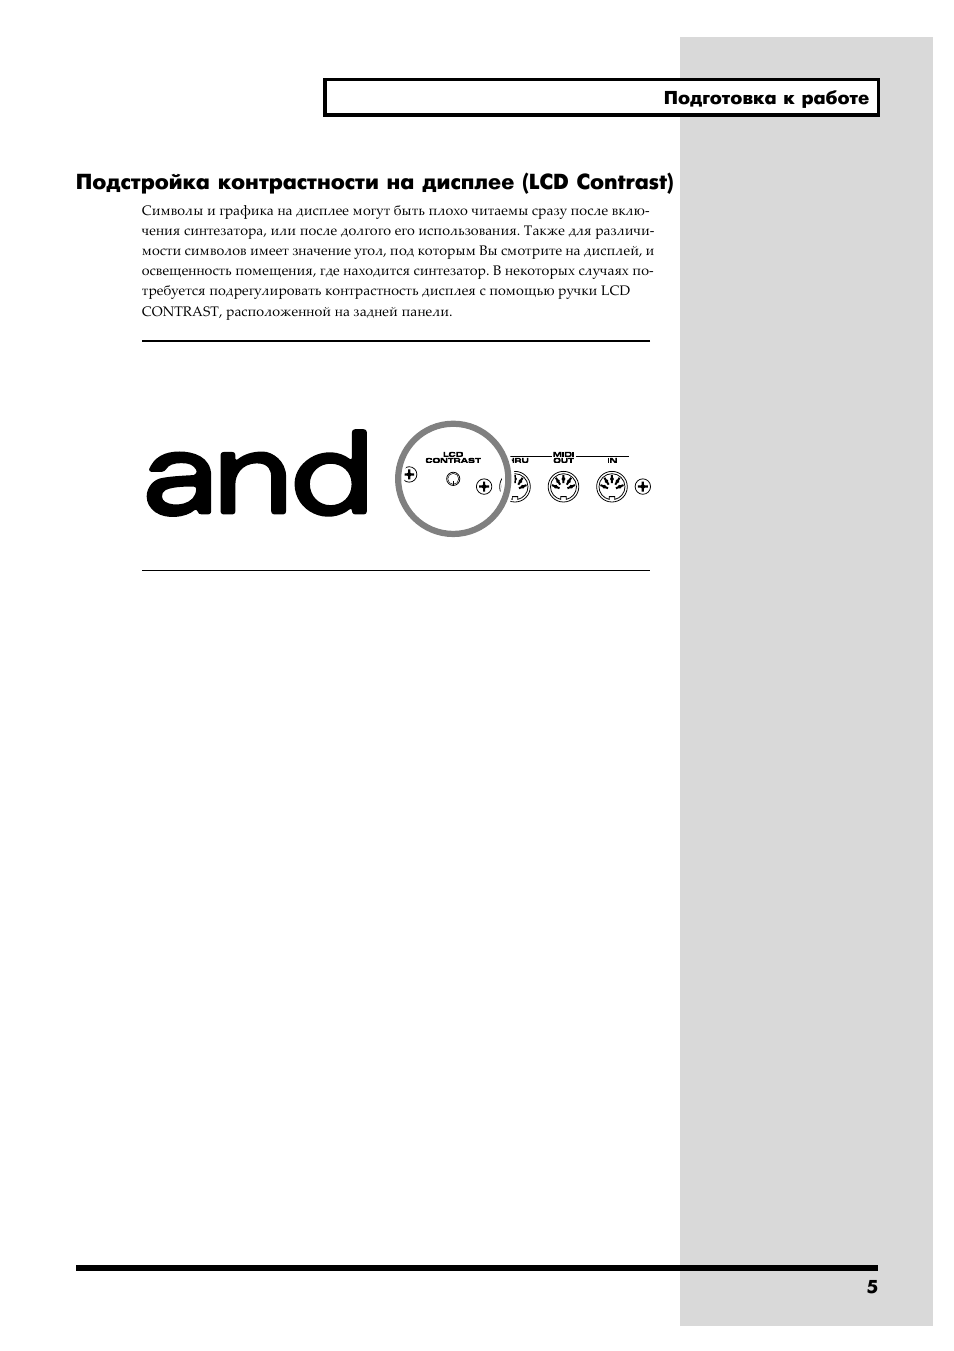 Подстройка контрастности на дисплее (lcd contrast) | Инструкция по эксплуатации Roland V-Synth | Страница 5 / 32